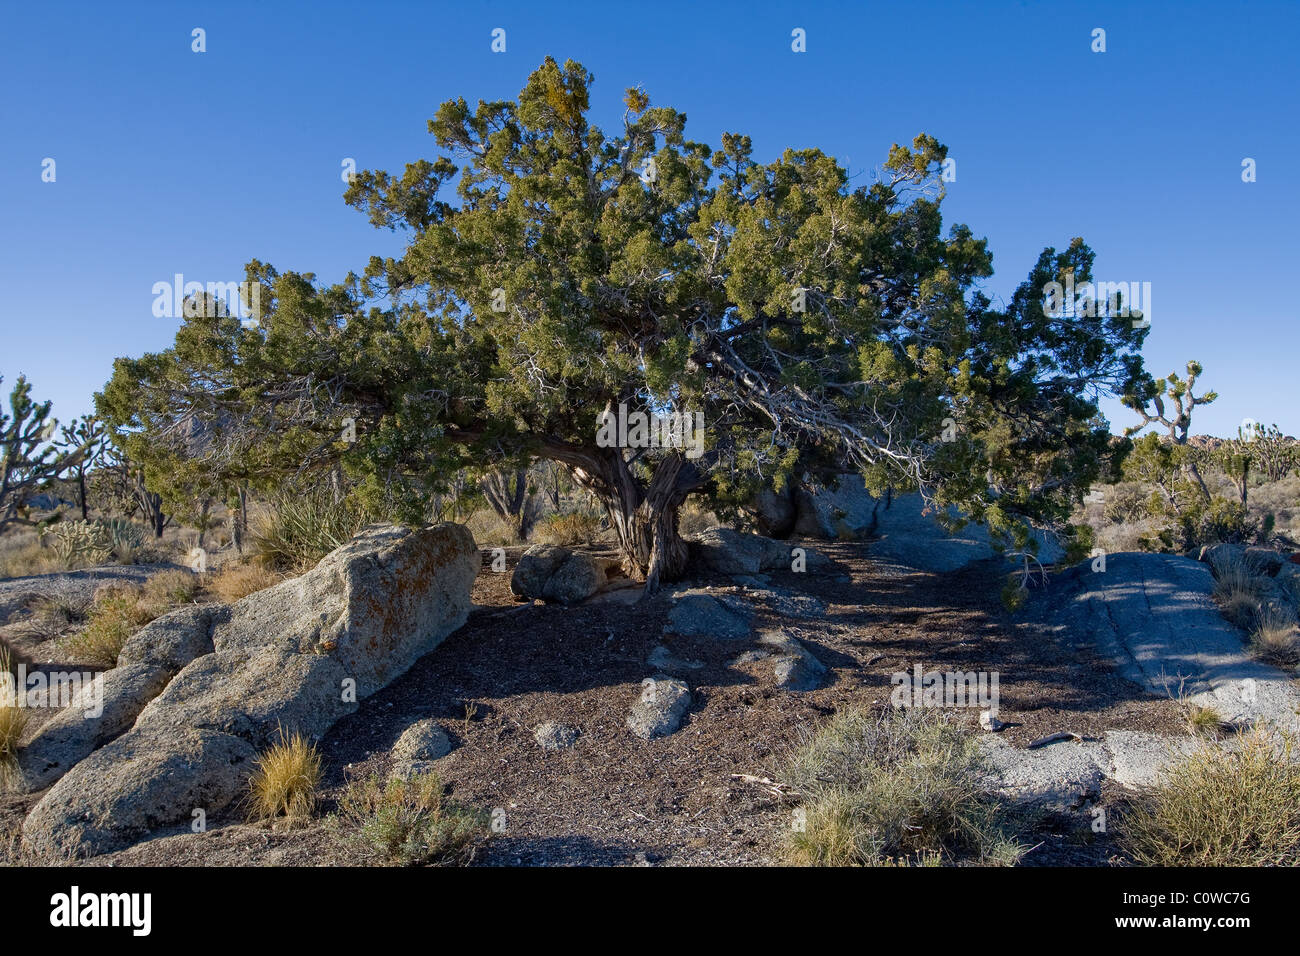 Utah Juniper - Juniperus osteosperma, Mojave desert, California. Stock Photo